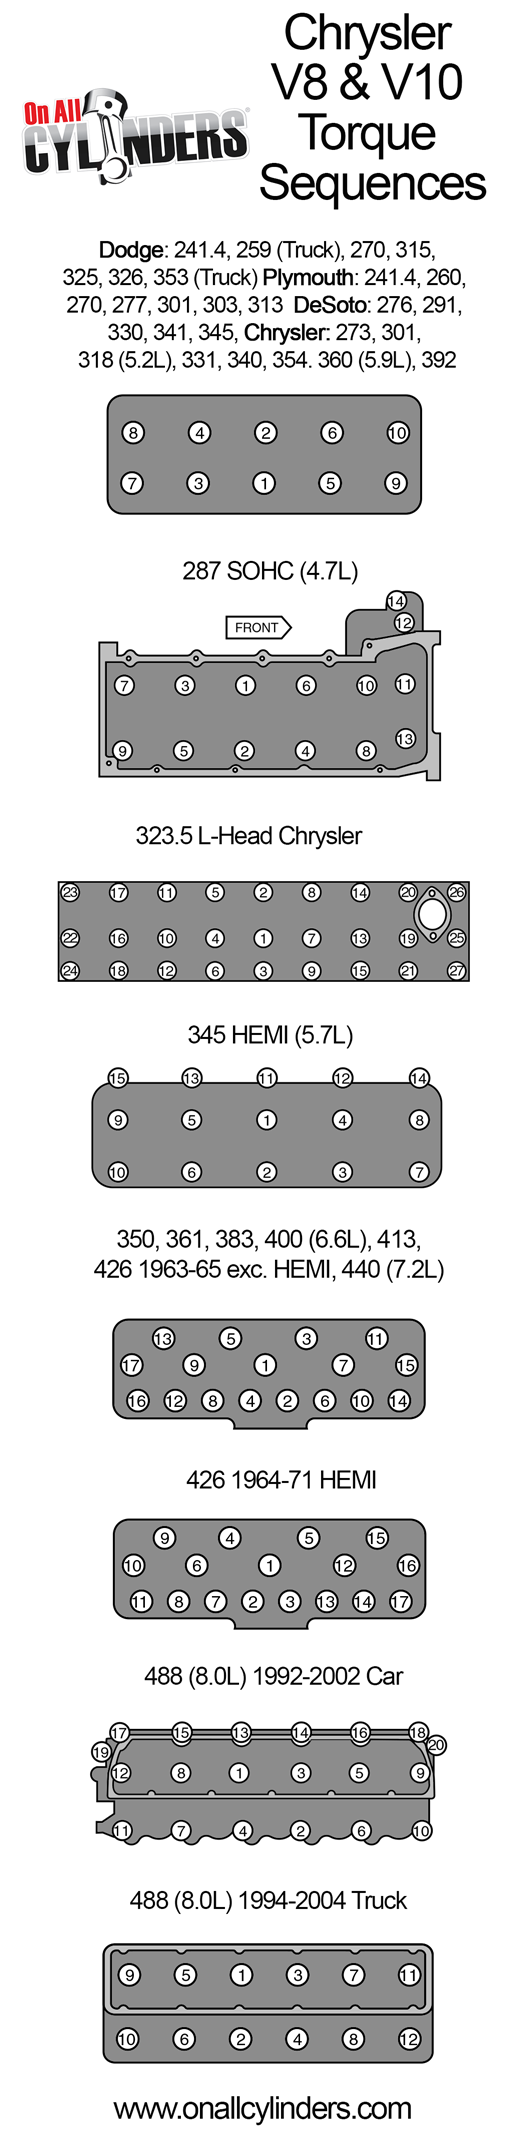 Chry-8-&-10-cyl-single-column